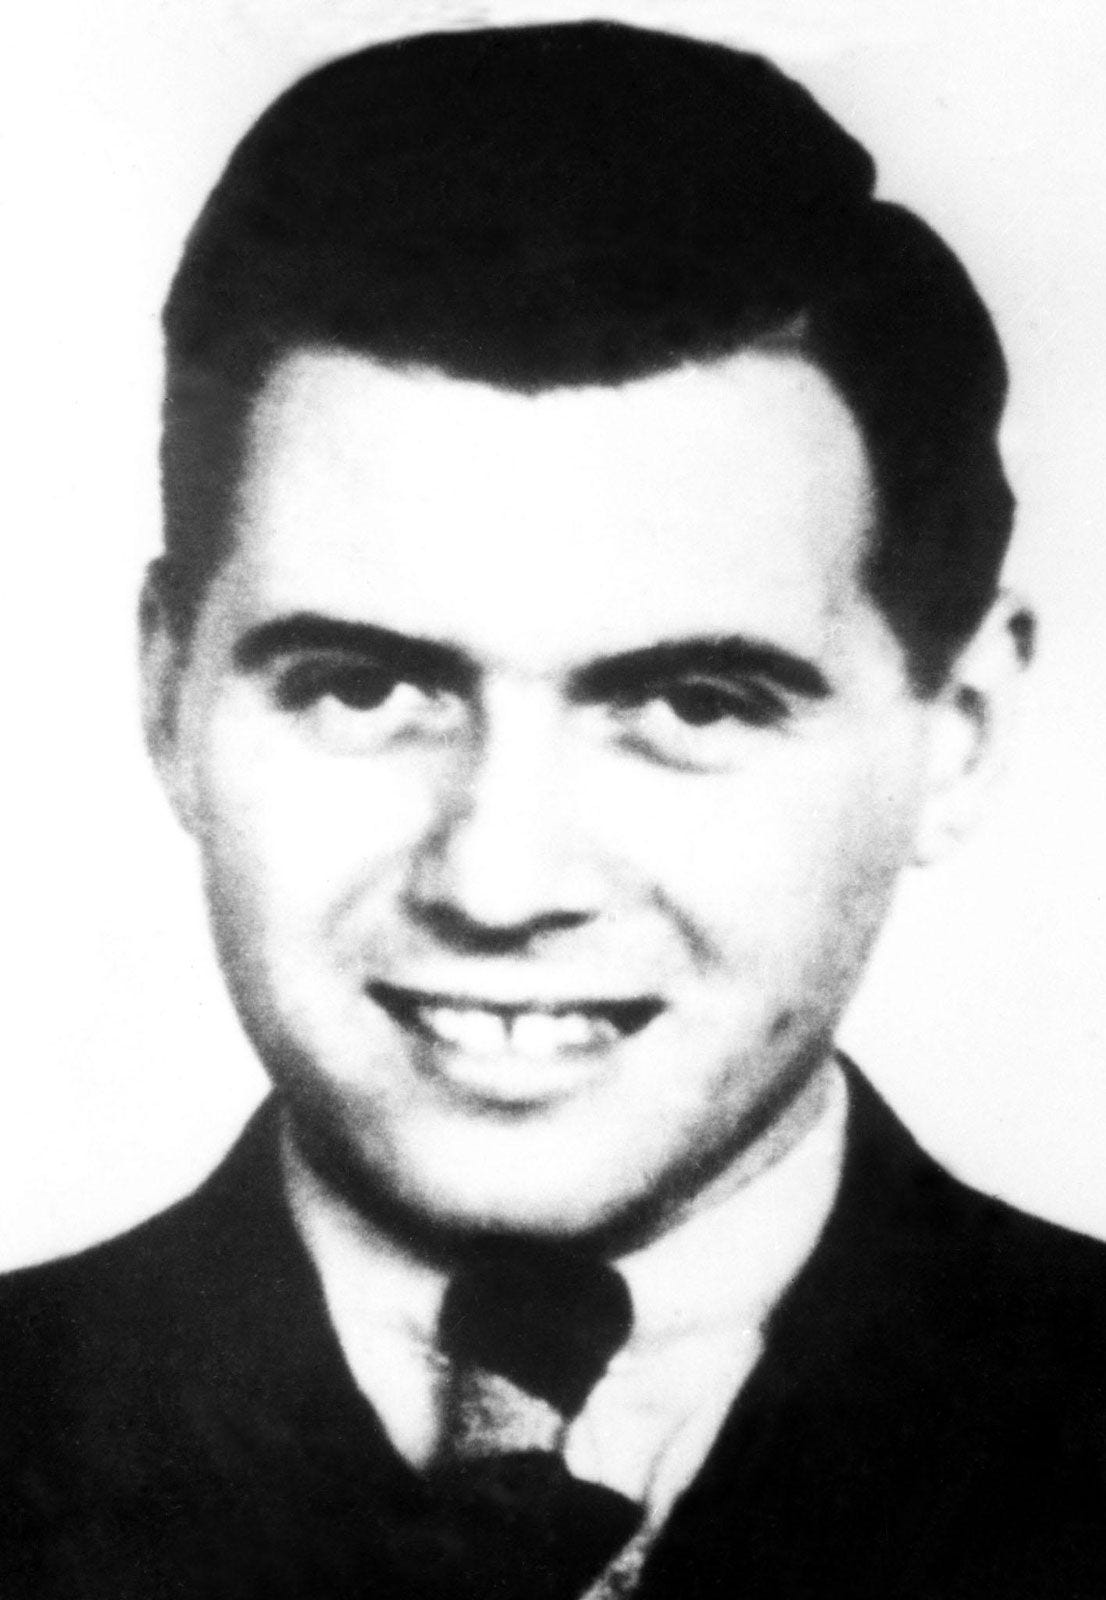 Josef Mengele | Biography, Death, Angel of Death, & Facts | Britannica